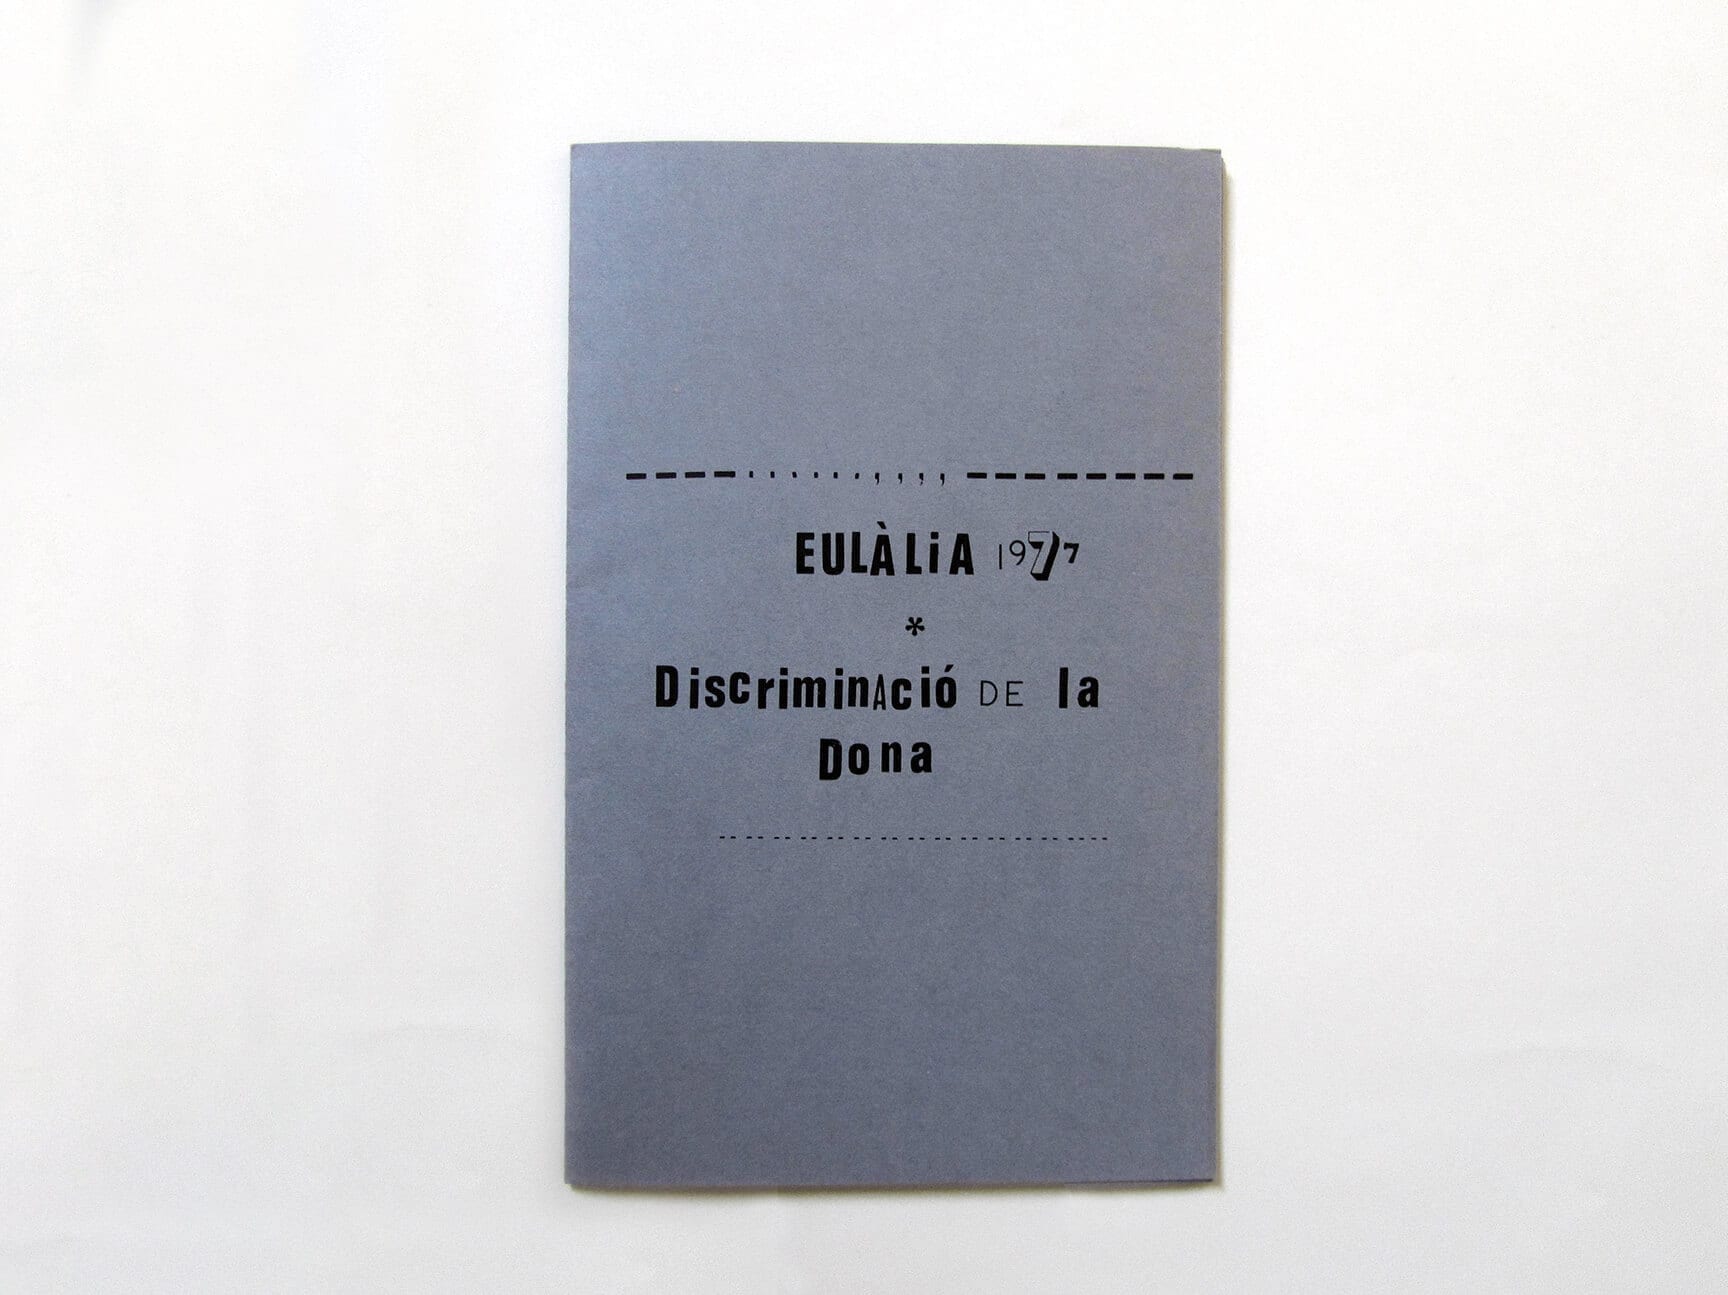 Eulia Grau, Discrimination of dona (Discrimination of Women), 1977